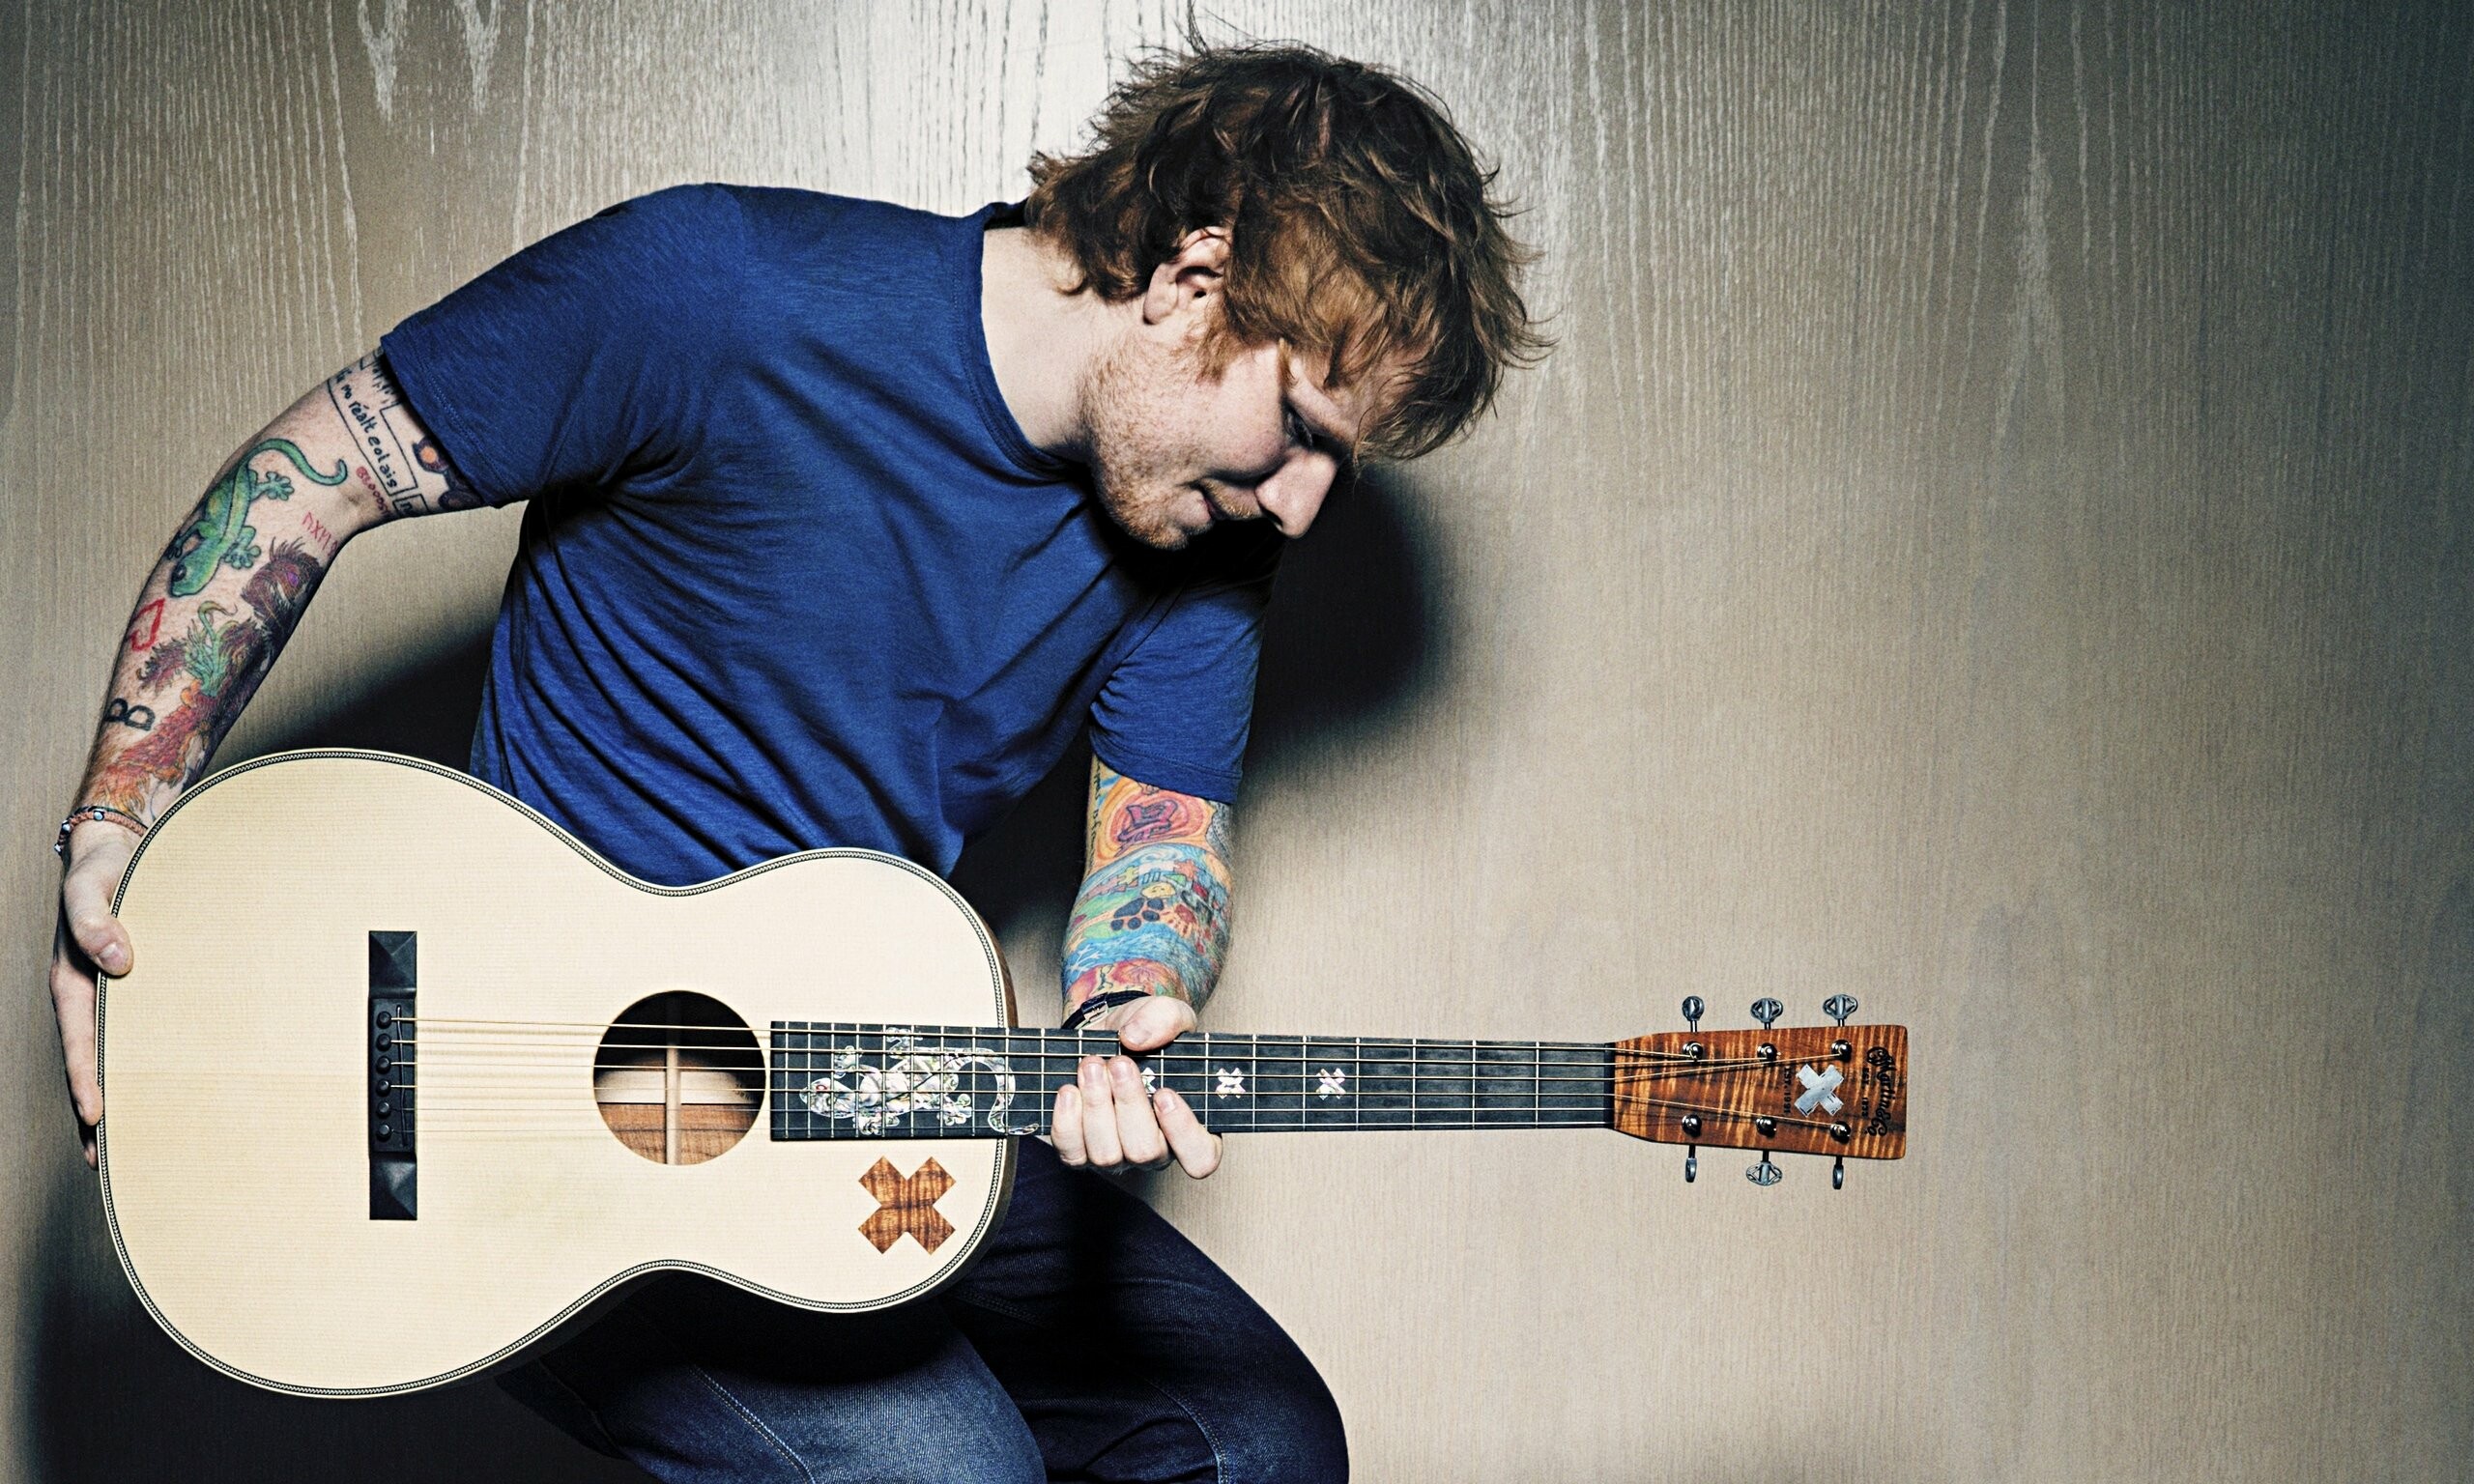 Ed Sheeran: Pop, Folk, Singer, "Don't" peaked at No. 8 on the UK Singles Chart. 2560x1540 HD Wallpaper.